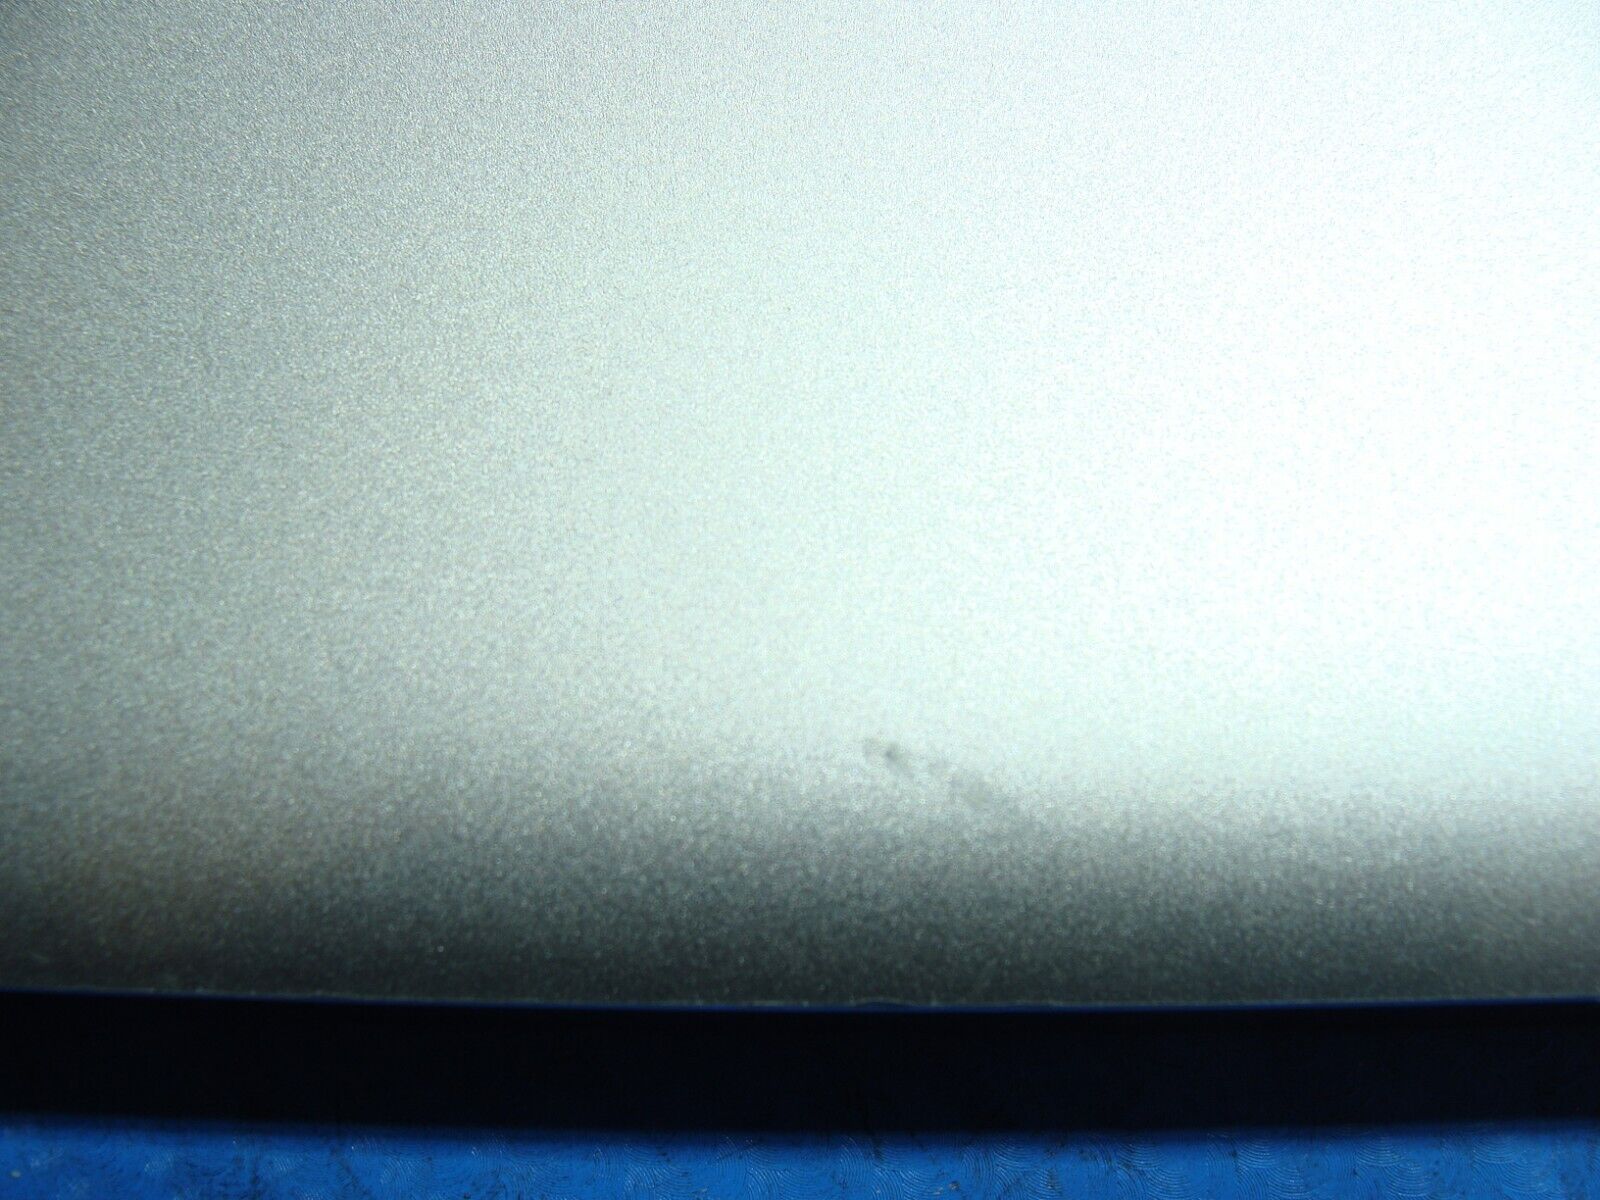 MacBook Pro A1278 MC700LL/A Early 2011 13